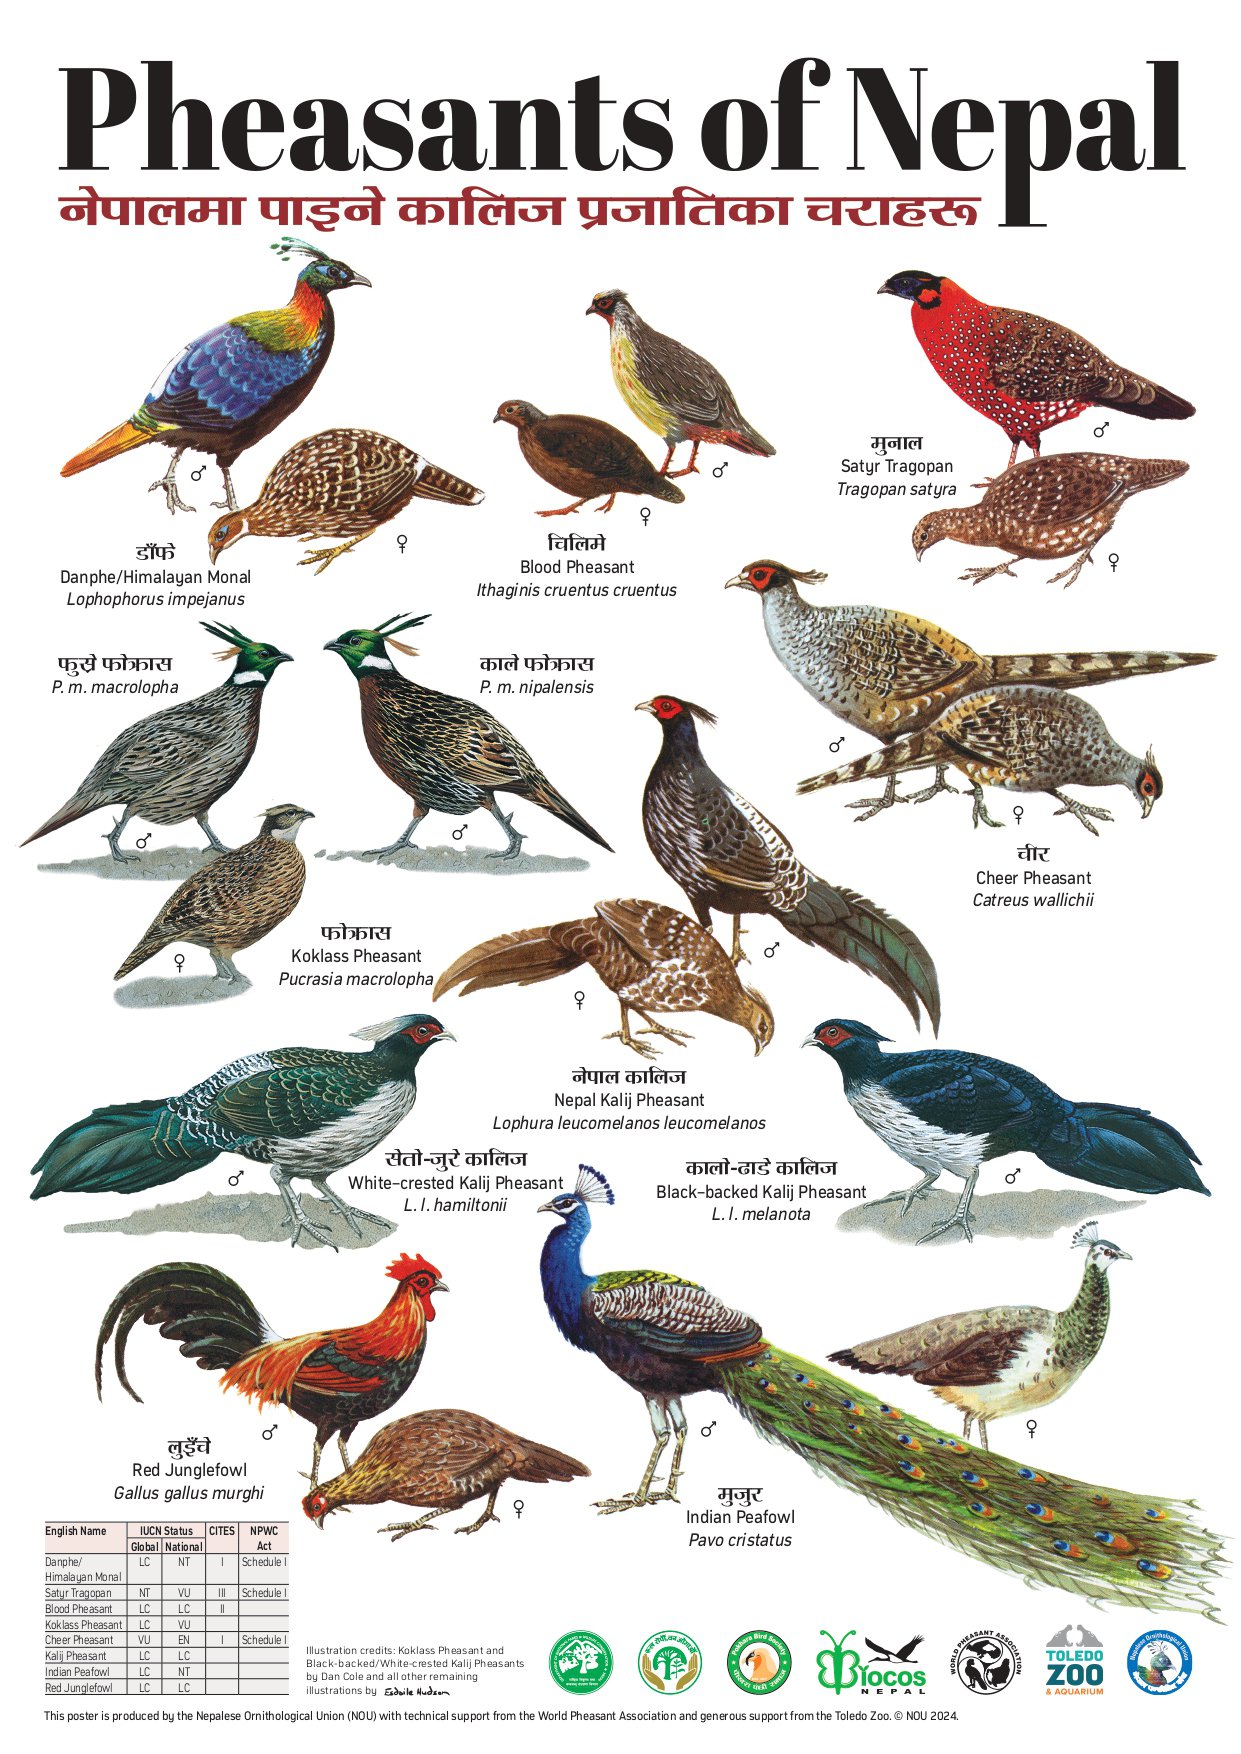 Pheasants of Nepal